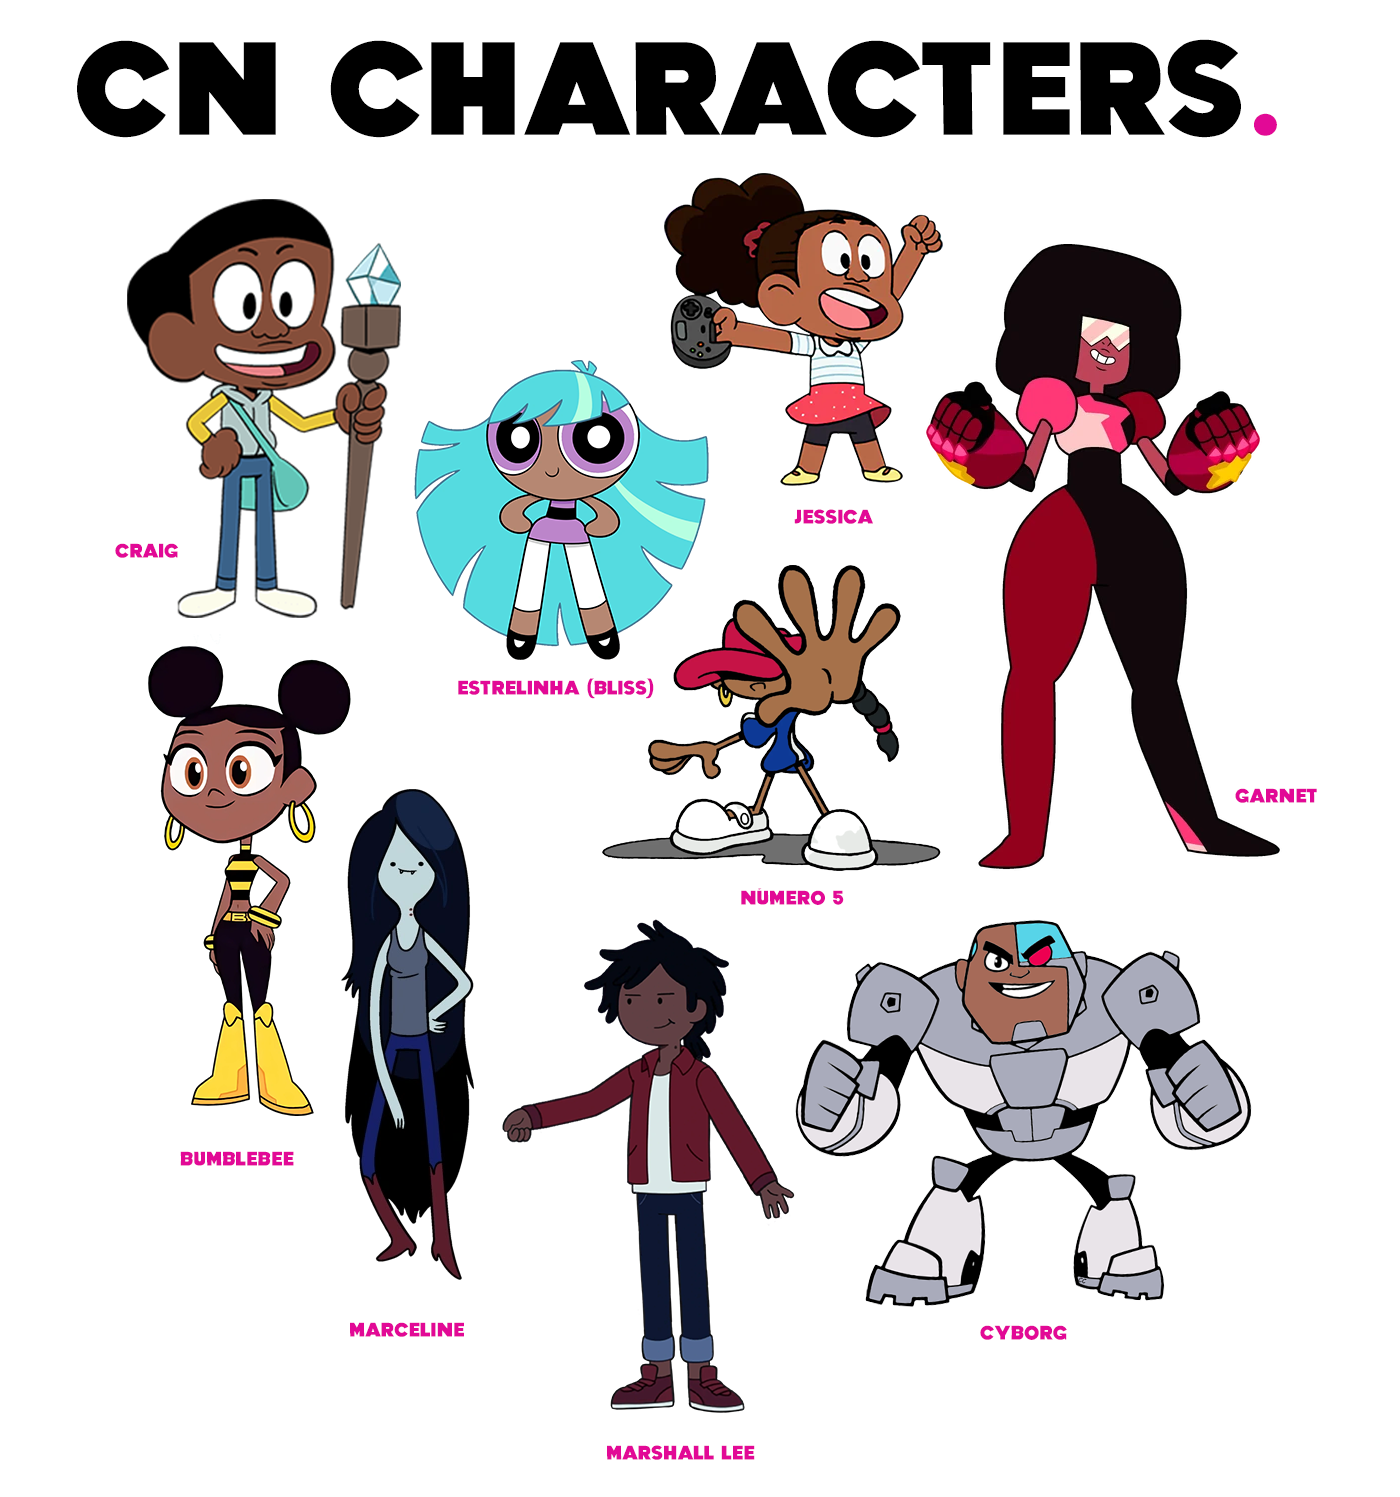 cartoon network HBO max Advertising  Character design  black character BLM Black Lives Matter Poster Design Black Awareness Day